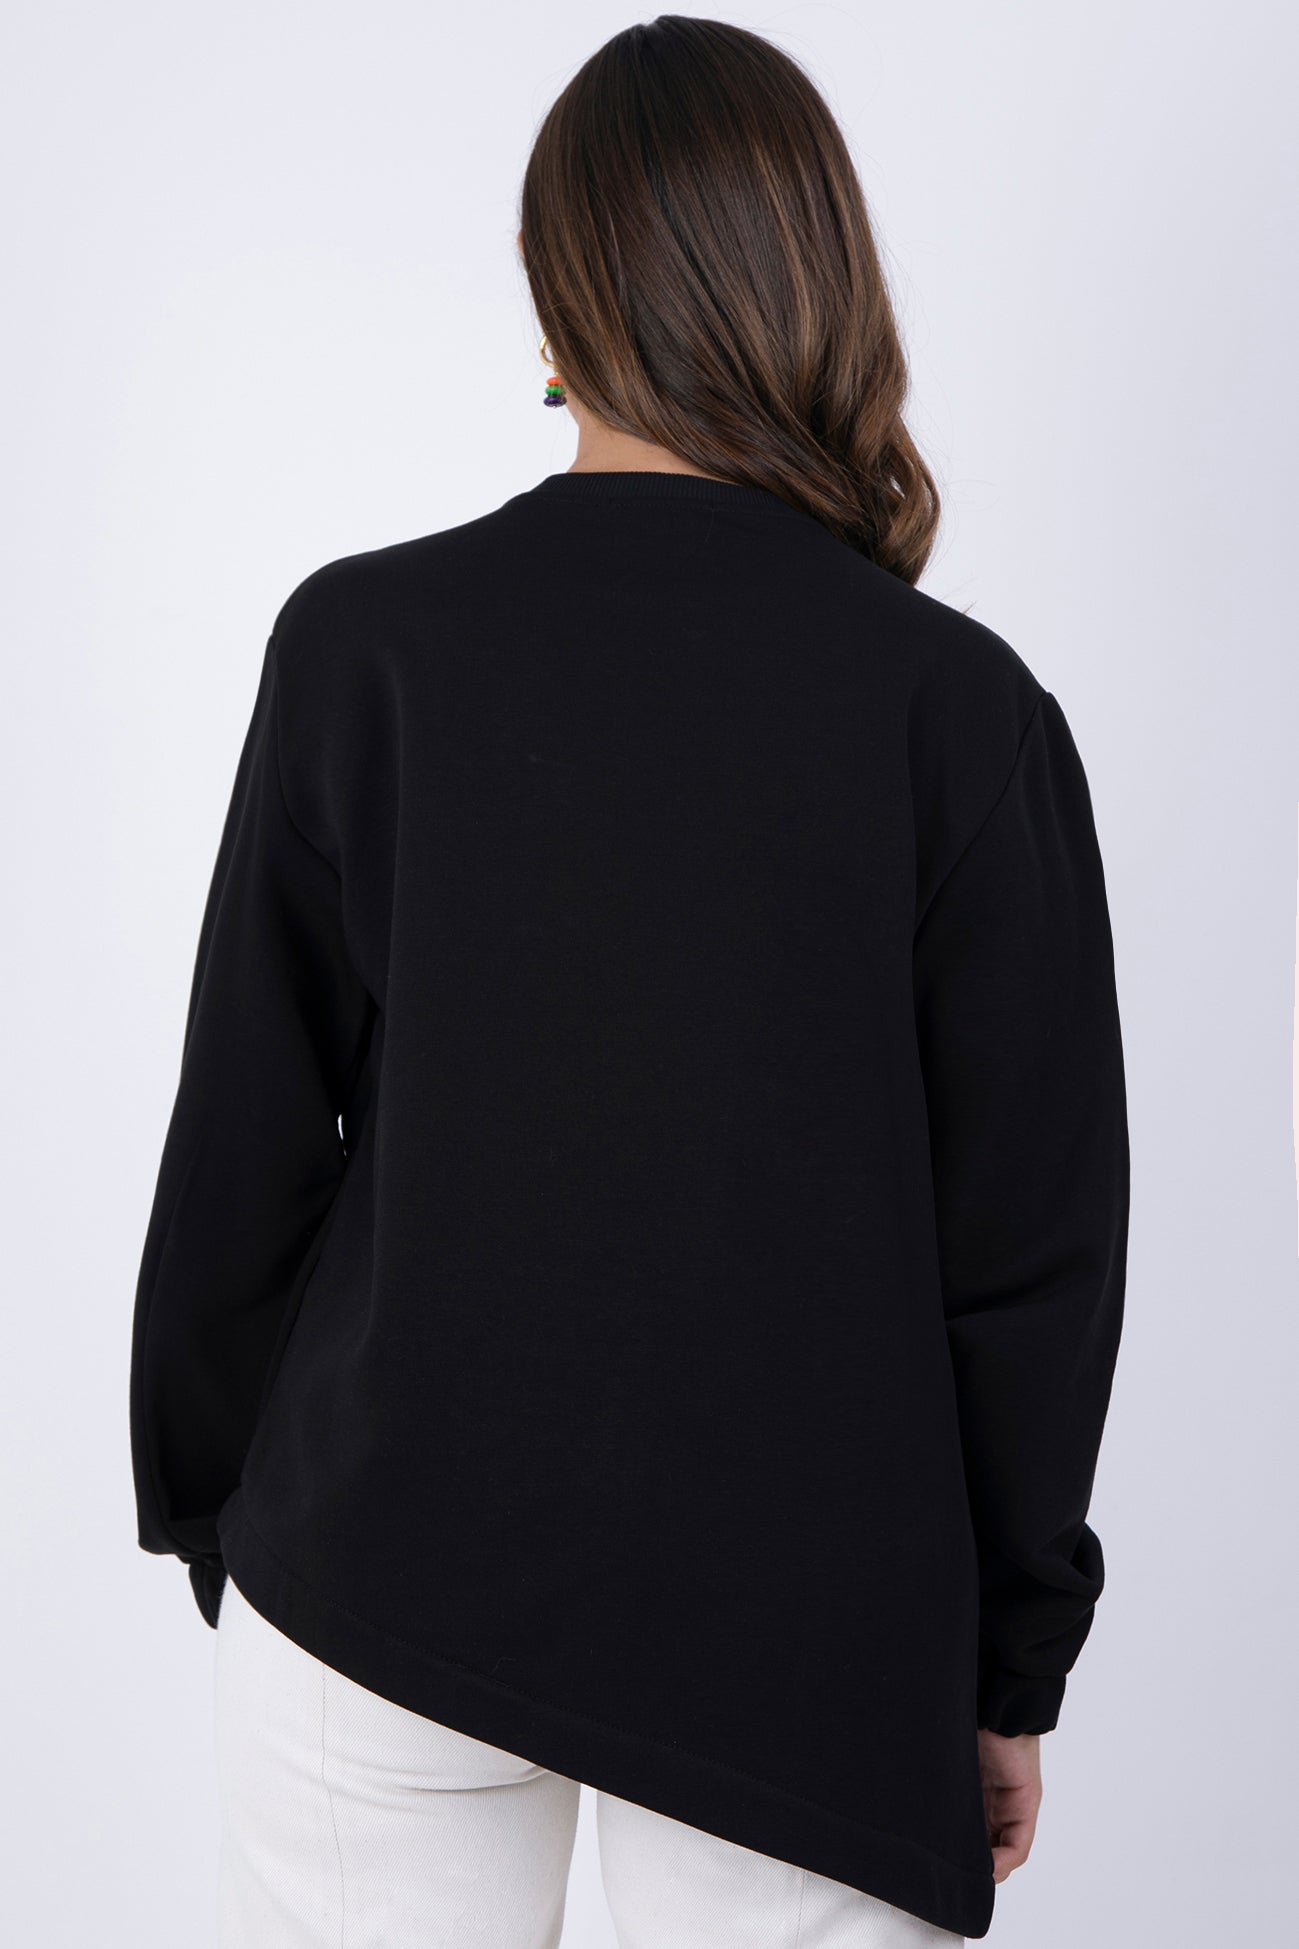 Ararat cotton sweater in black